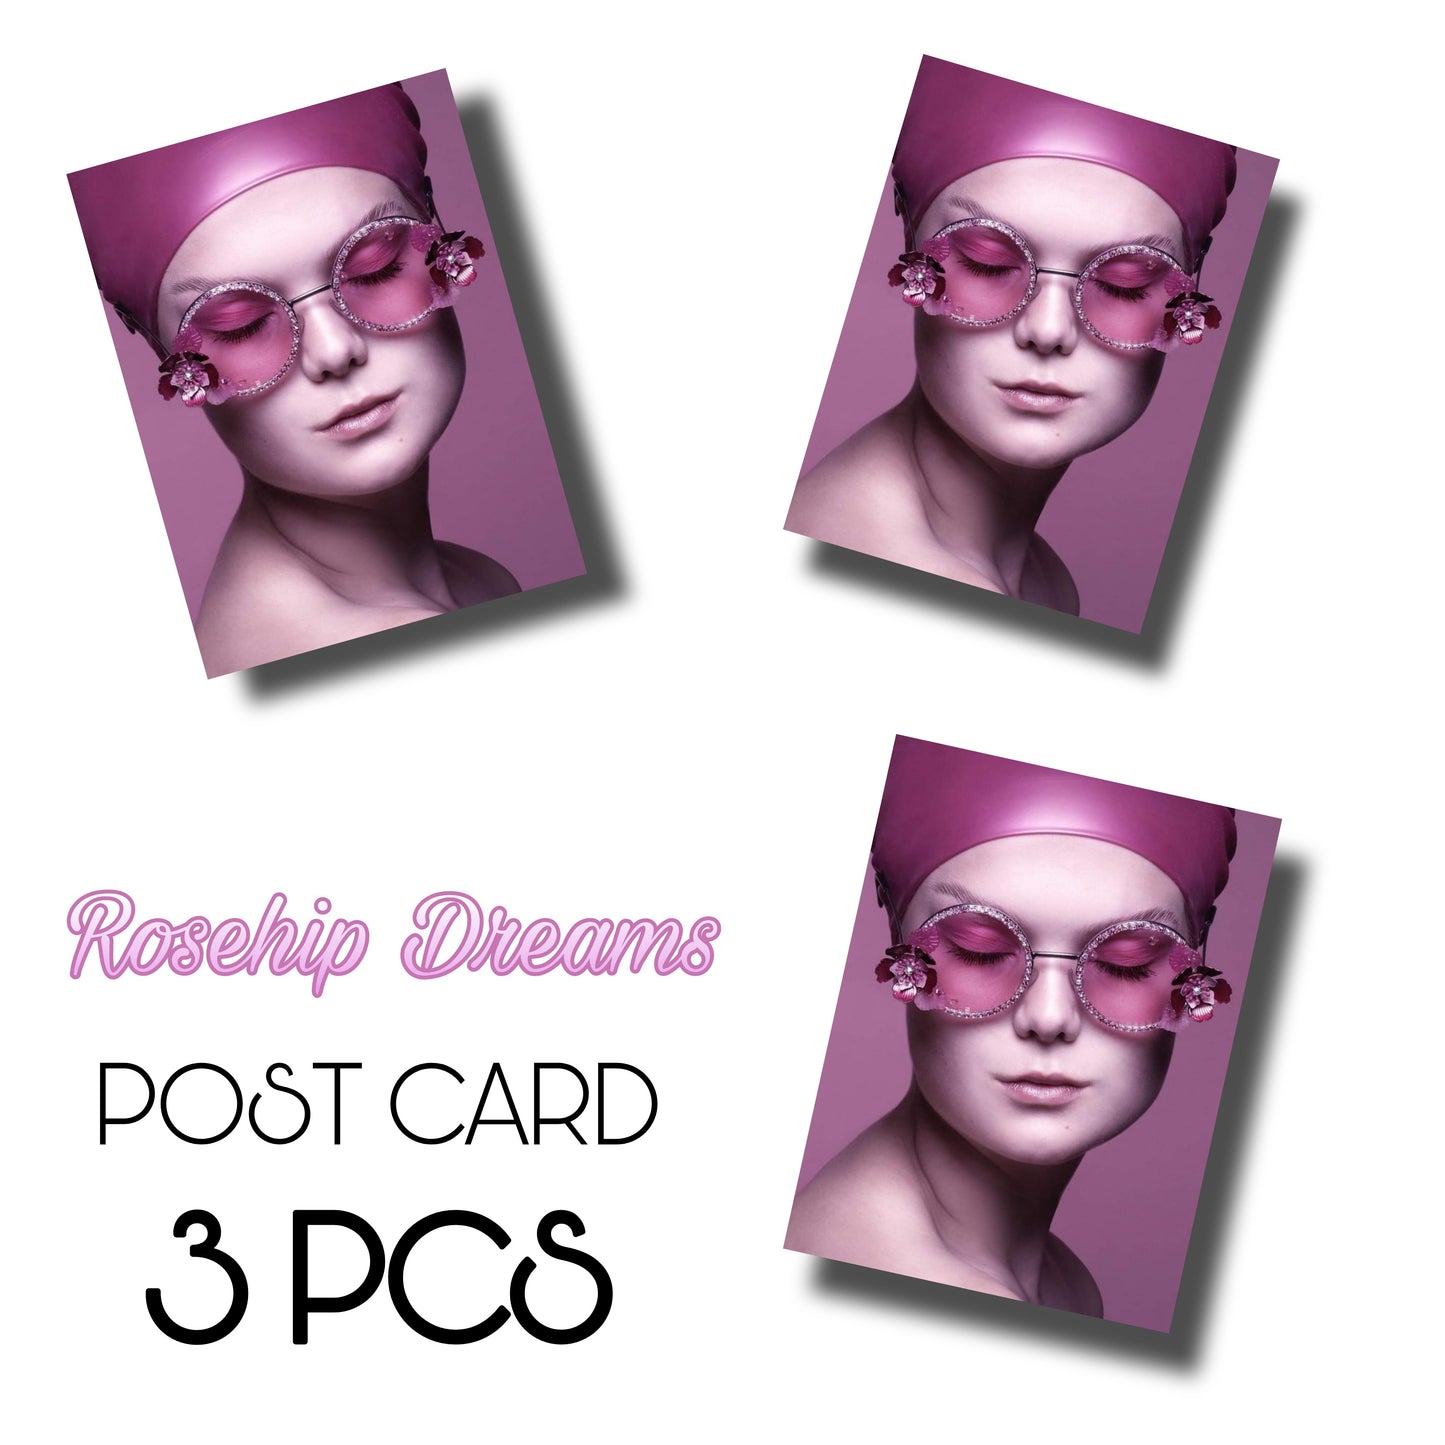 Bumblebee Dreams collection: Rose Hip Dreams Postcard 3 PCS